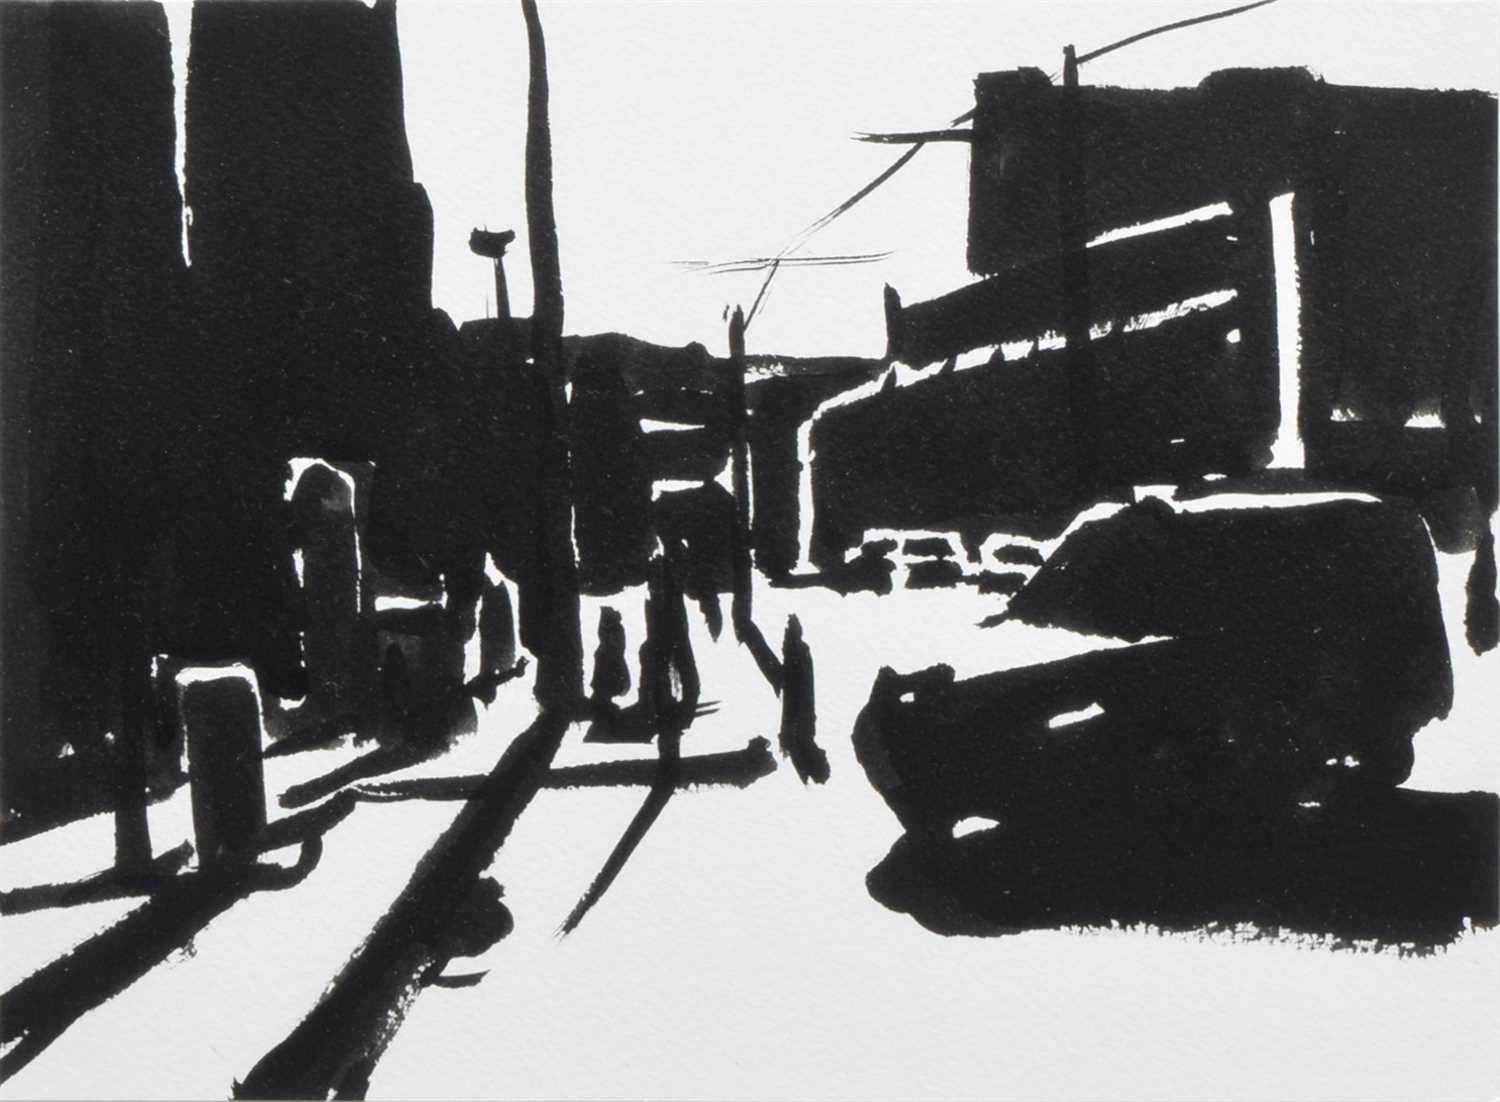 507 - Liam Spencer, "High Street", ink.